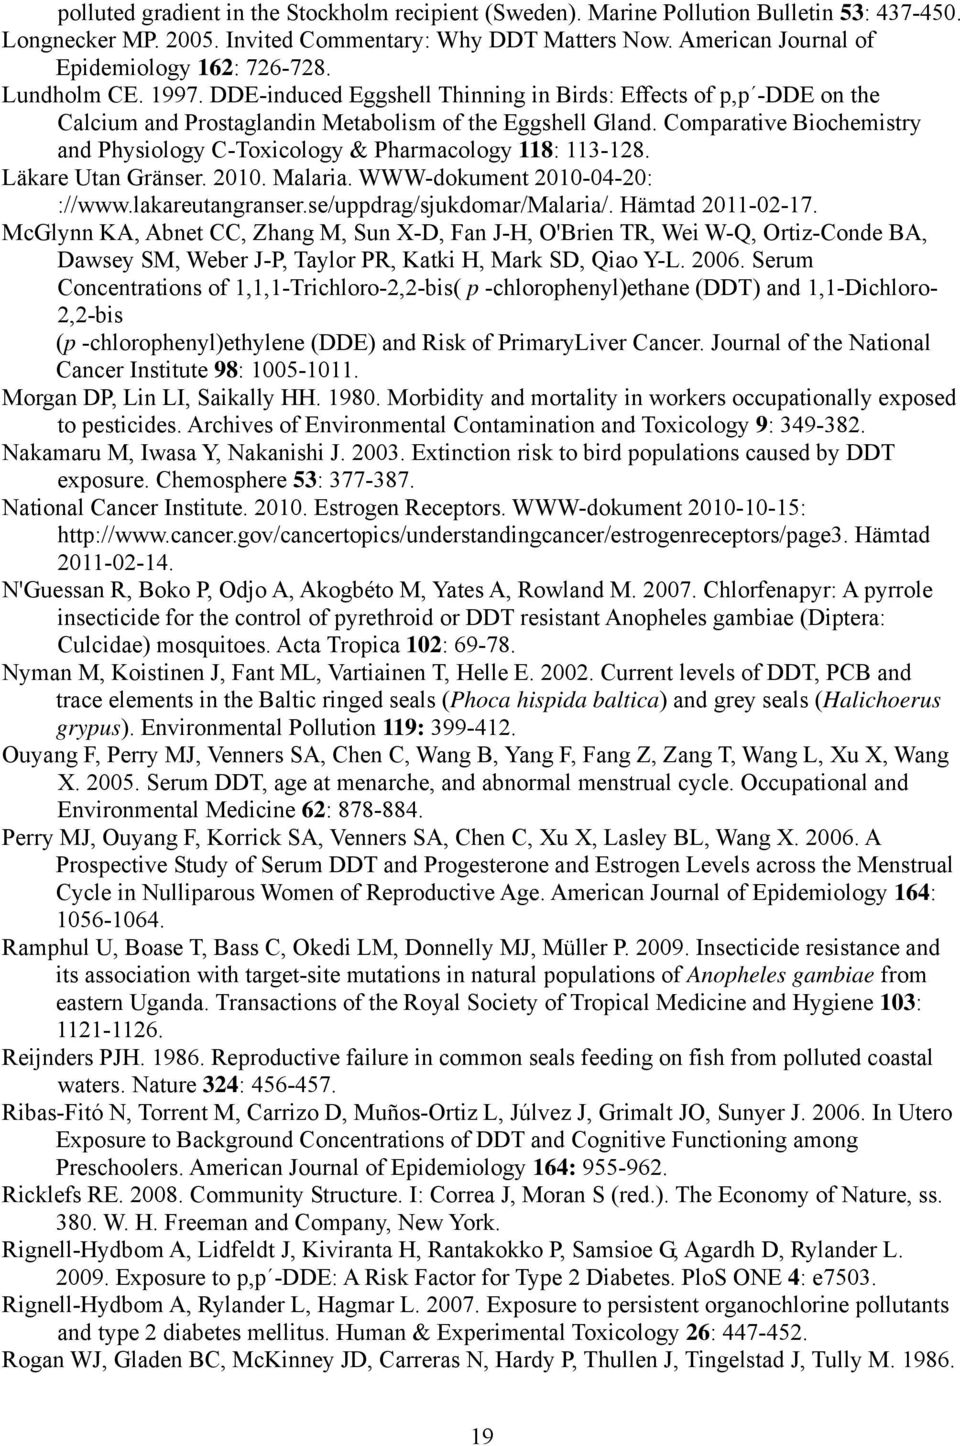 Comparative Biochemistry and Physiology C-Toxicology & Pharmacology 118: 113-128. Läkare Utan Gränser. 2010. Malaria. WWW-dokument 2010-04-20: ://www.lakareutangranser.se/uppdrag/sjukdomar/malaria/.